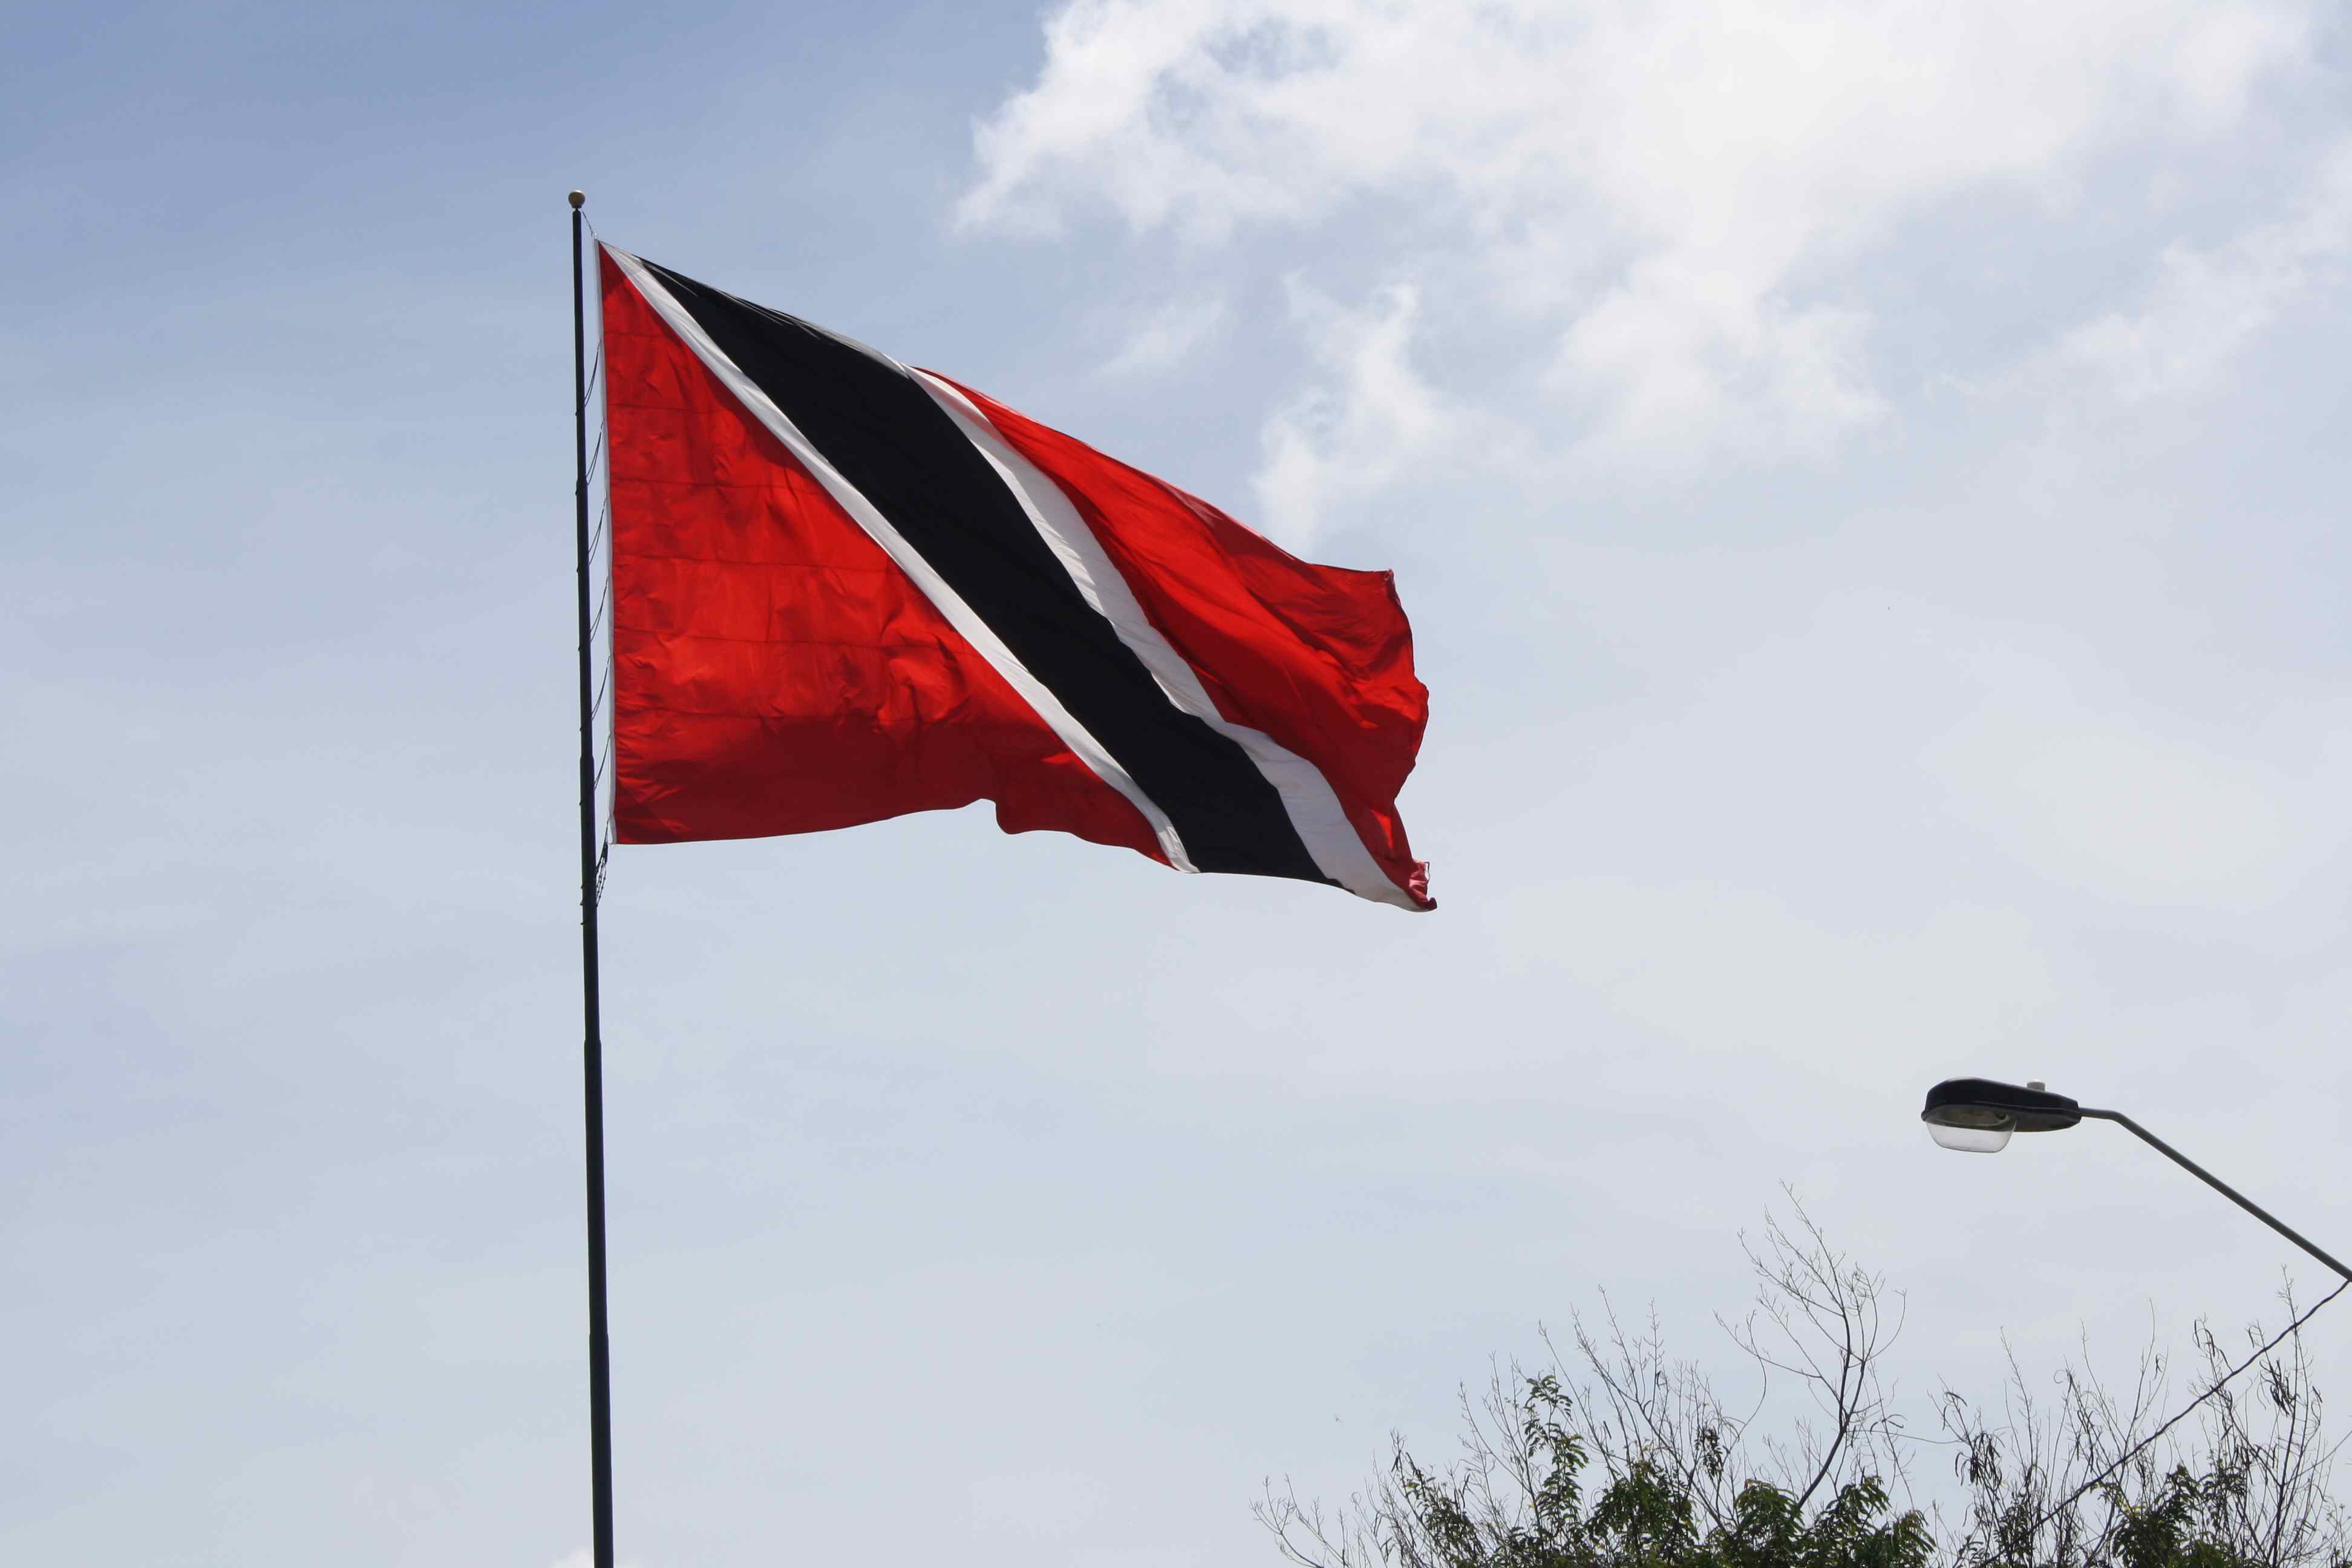 Trinidad moves to resume hangings - Amsterdam News